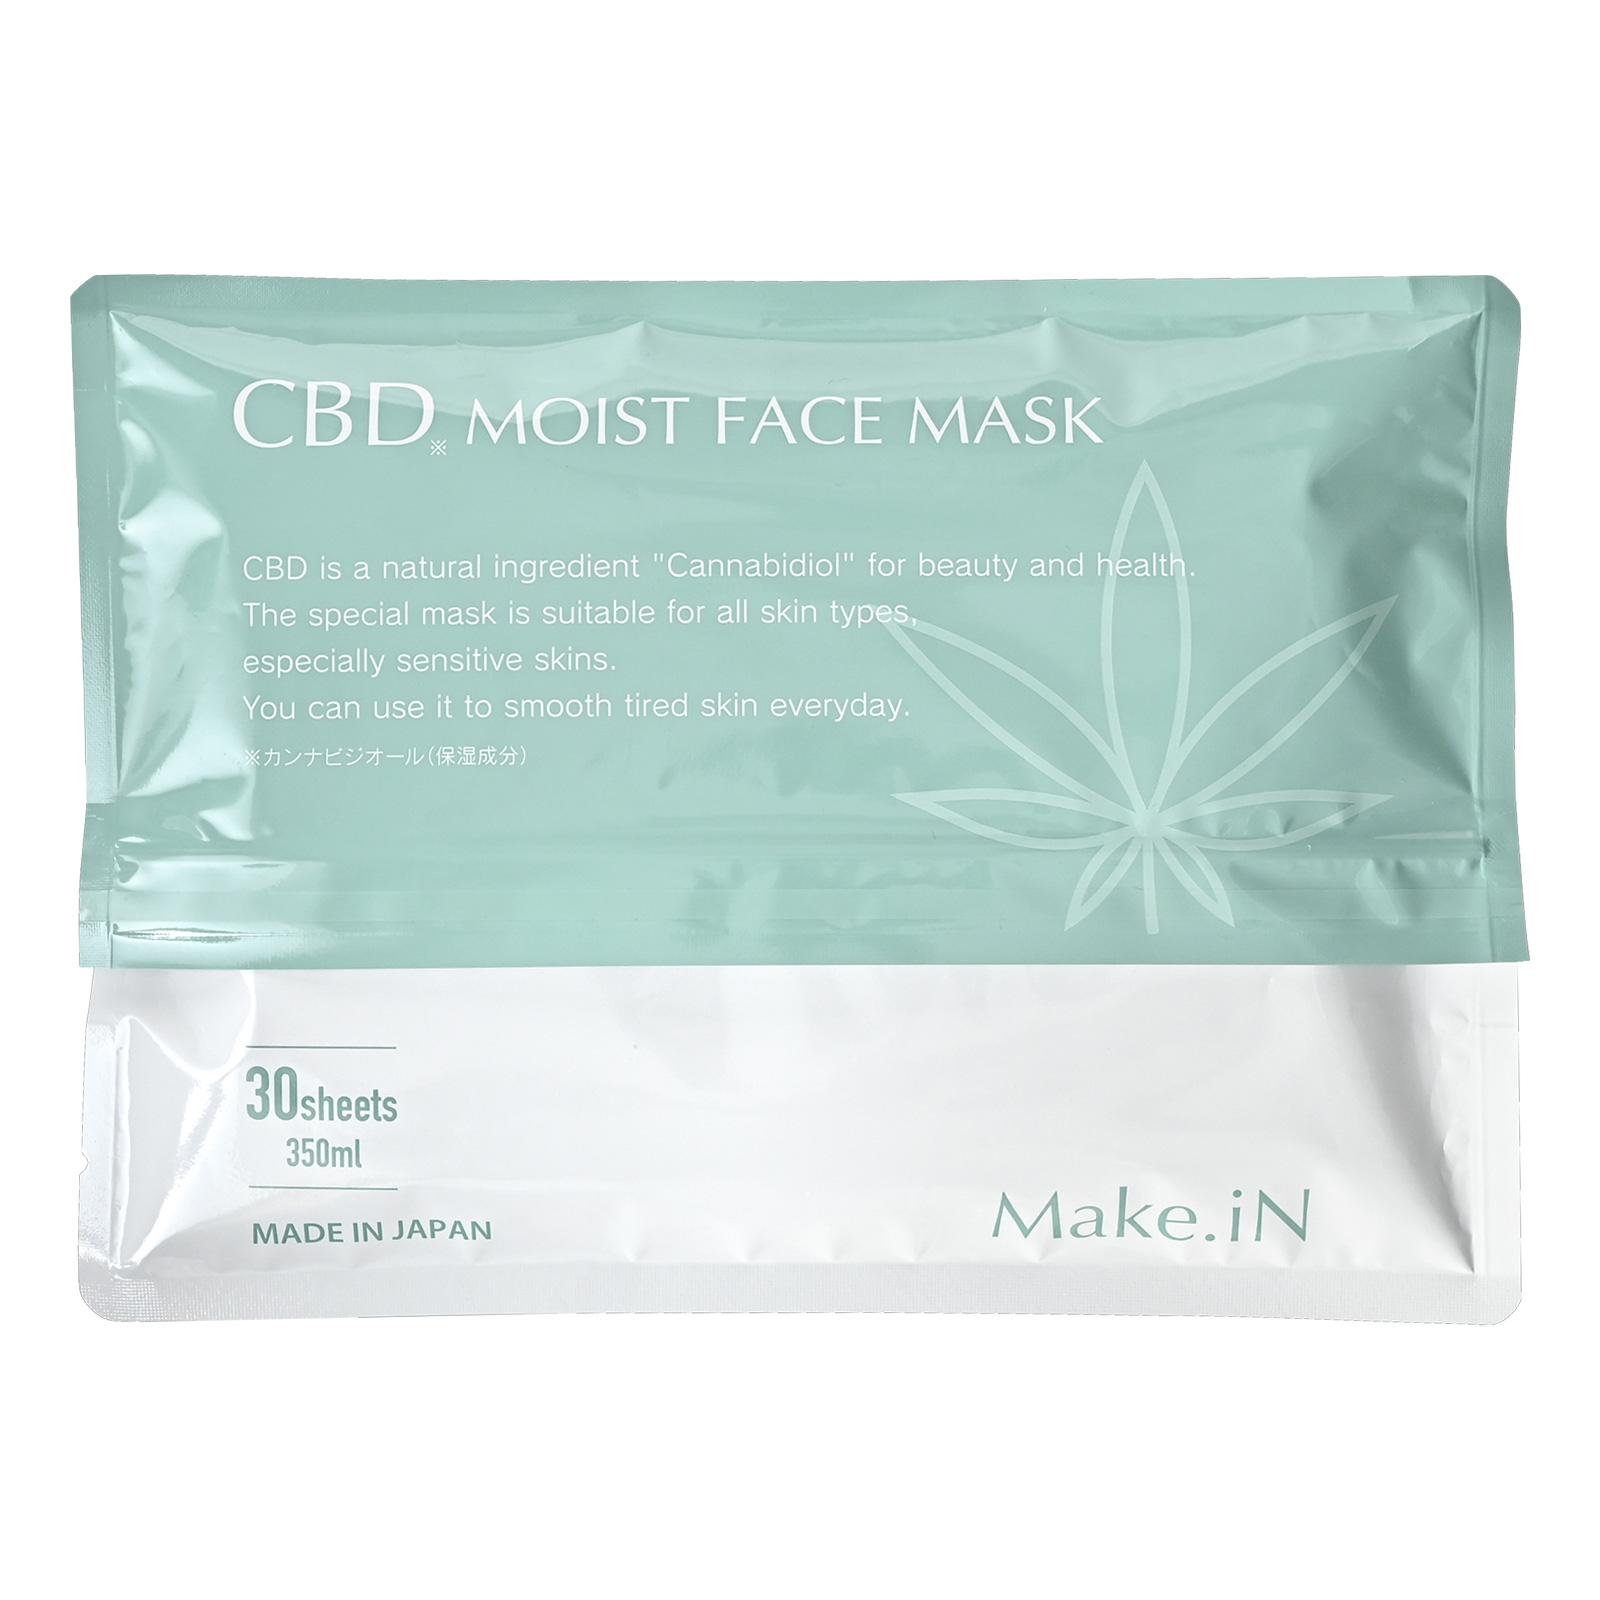 Make.iN CBD Moist Face Mask. Увлажняющая маска для лица на основе конопли Мейк.иН, 30 шт. (350 мл)